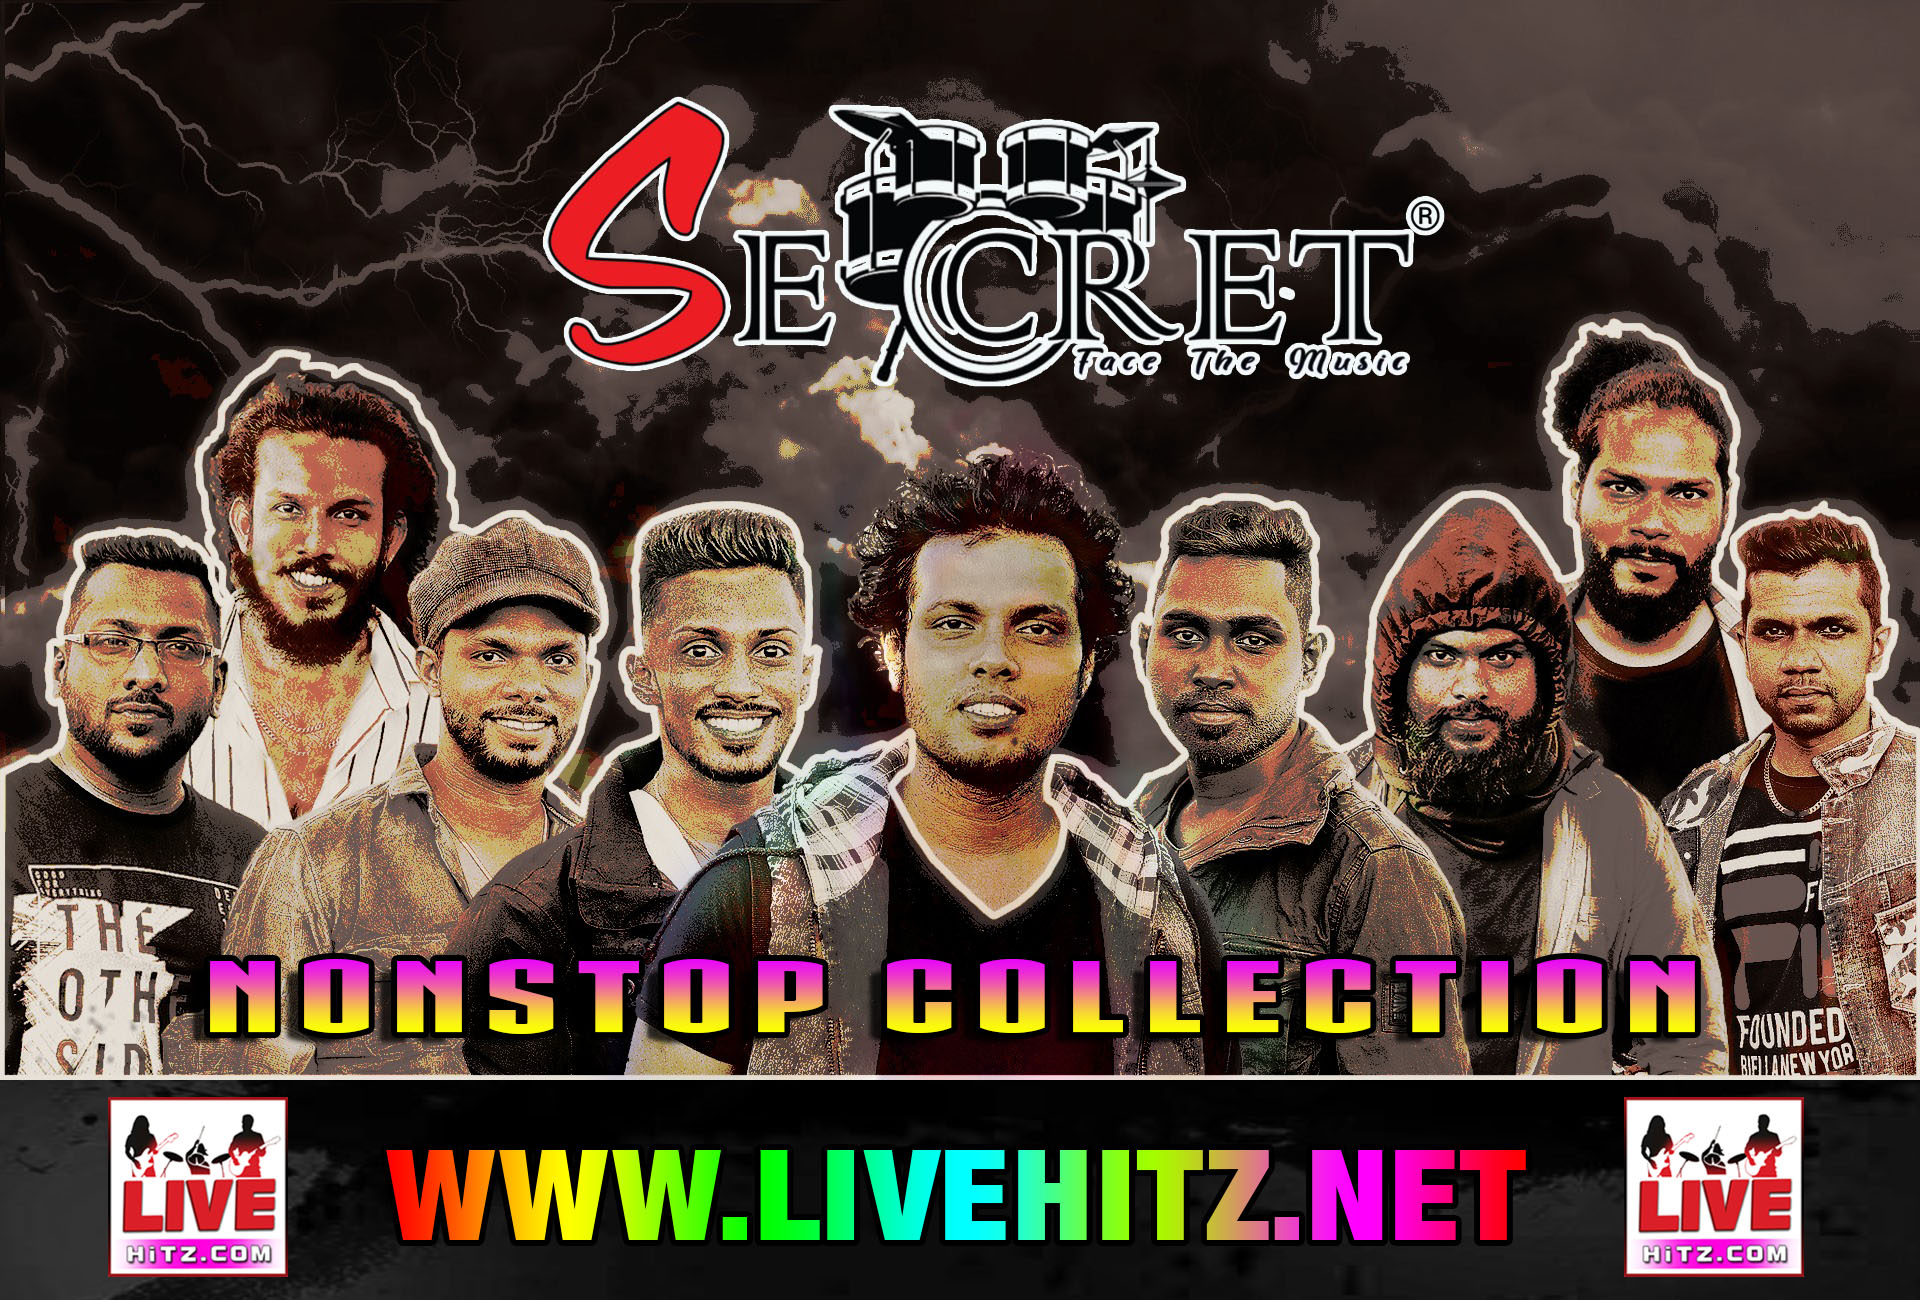 Secret Band Nonstop Collection Live Show Image